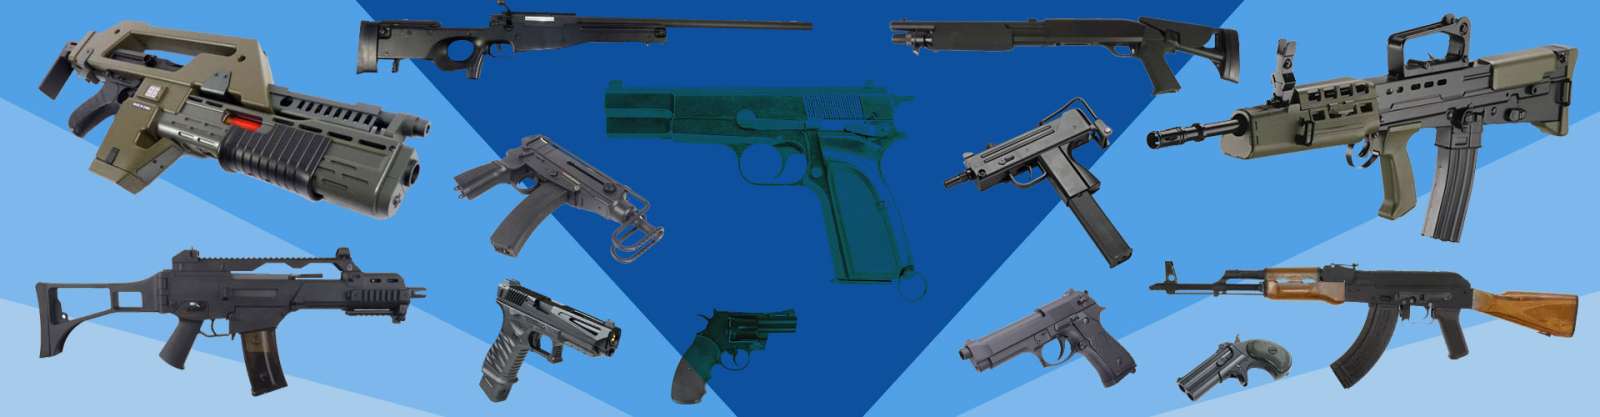 Airsoft Guns, Airsoft Pistols and Airsoft Rifles